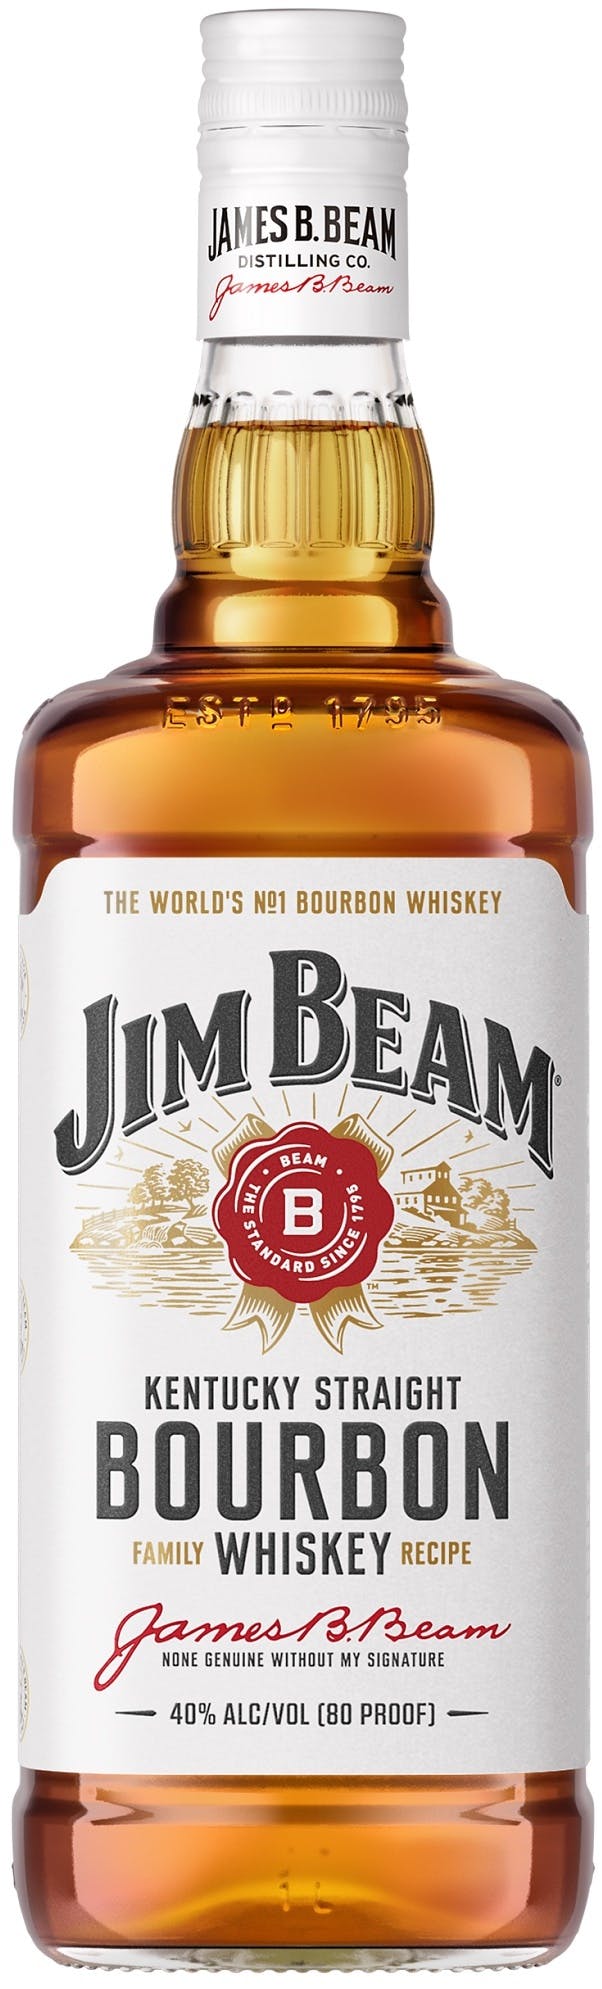 Jim Beam Kentucky Straight Bourbon Whiskey 4 year old 1L - Morton Williams